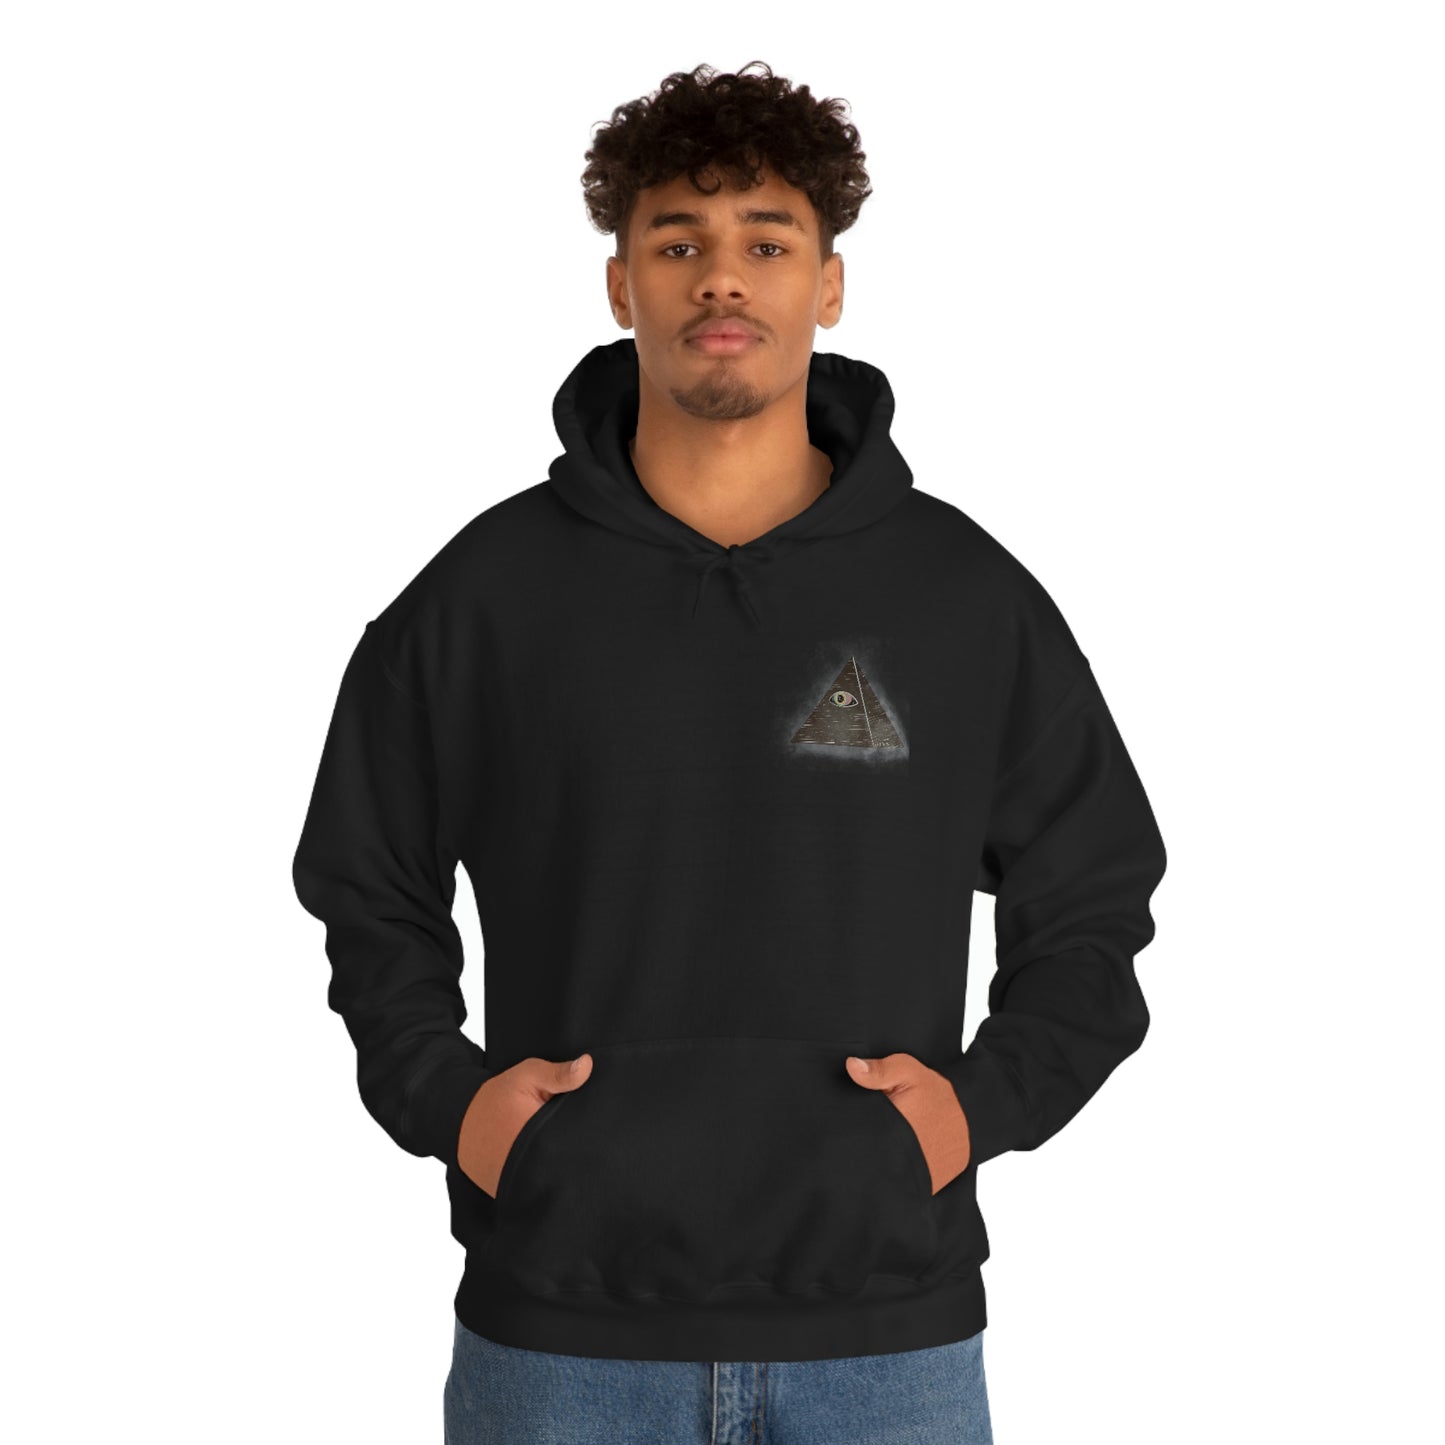 Unisex Tommy Tsunami Tri-Pyramid Hooded Sweatshirt